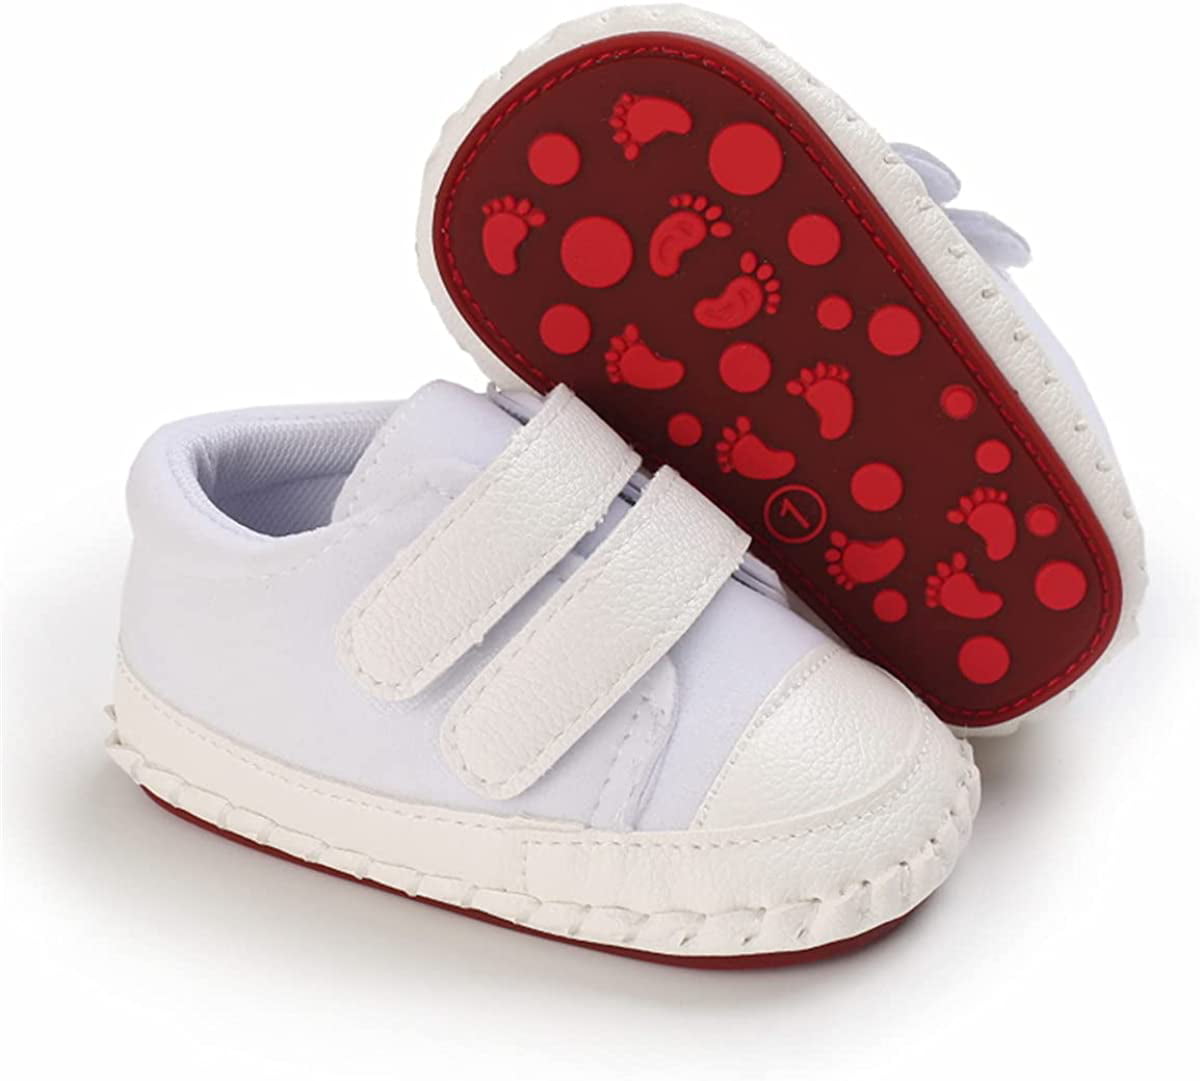 3-18 Months LAFEGEN Baby Boys Girls Walking Shoes Hard Bottom Non Slip PU Leather Outdoor Sneaker Infant Carton Slipper Toddler First Walker Crib Shoes 